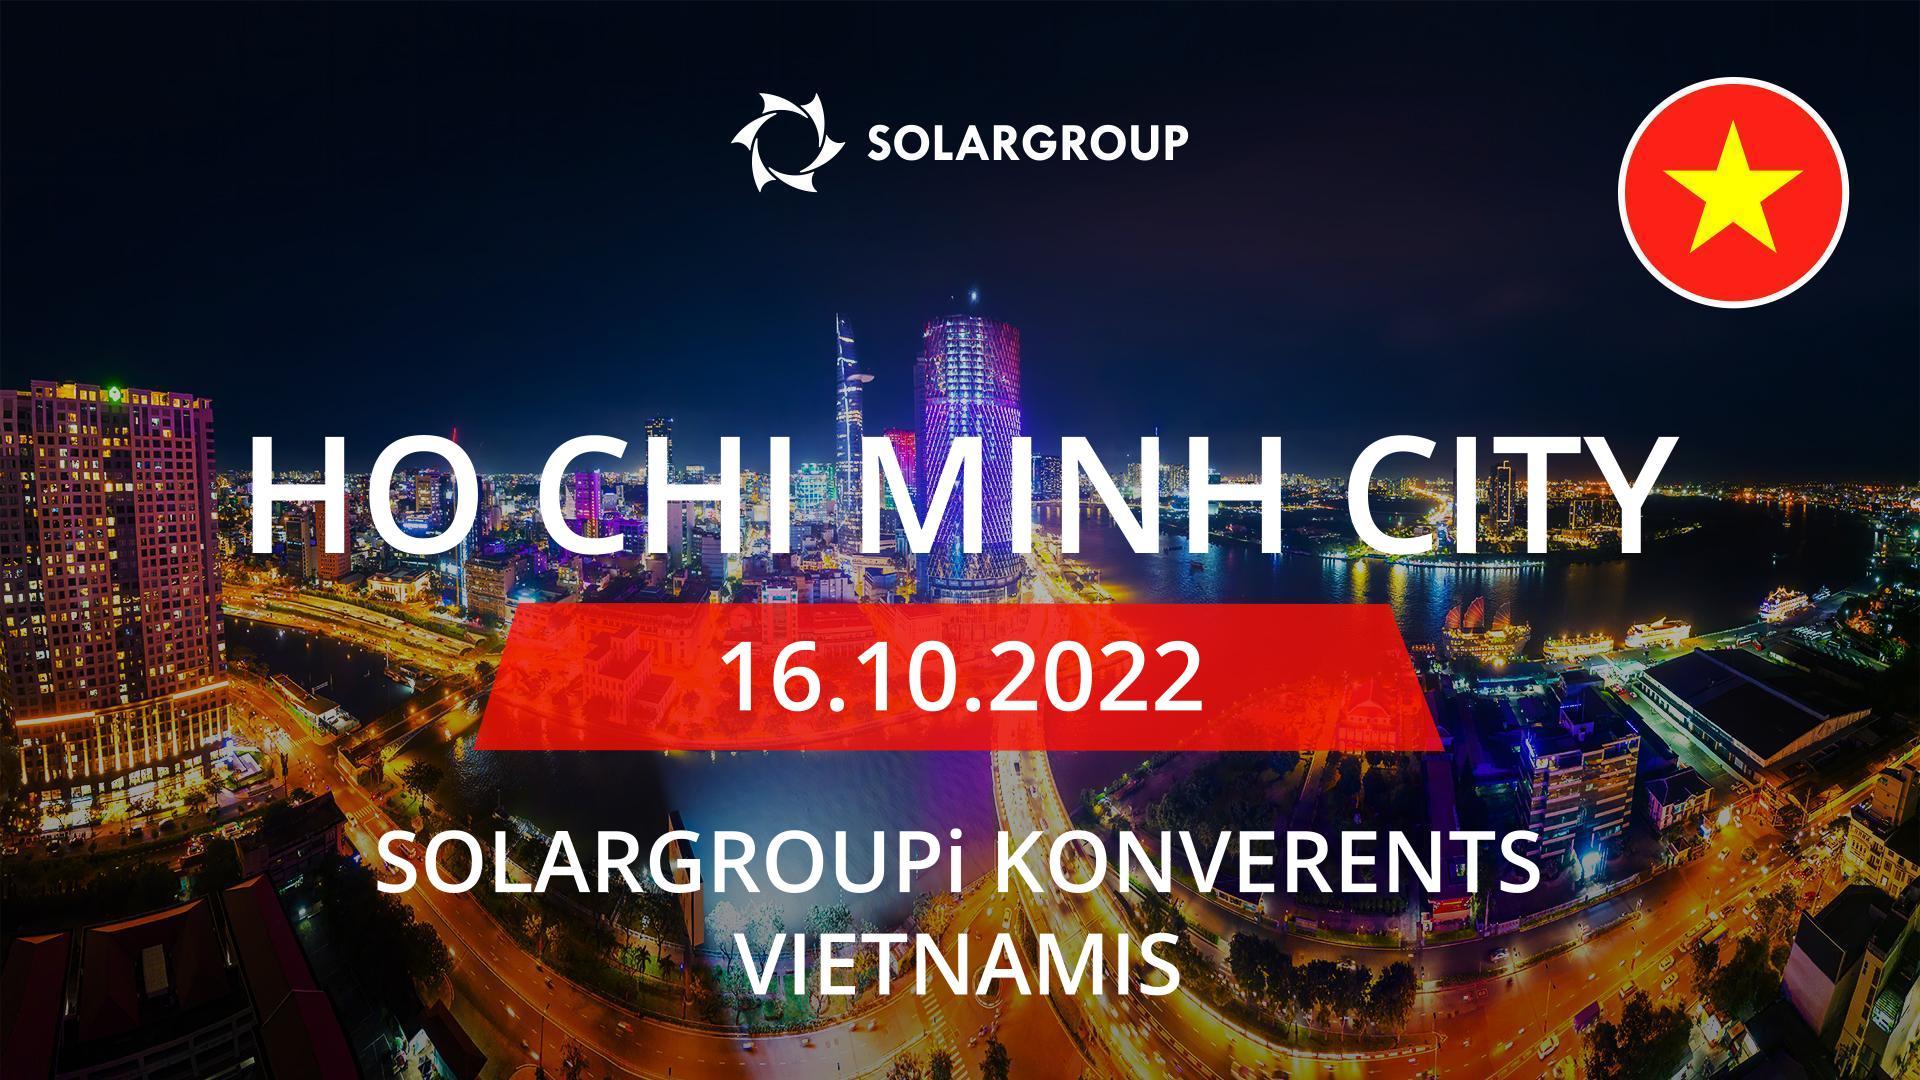 SOLARGROUPi konverents Ho Chi Minh City's